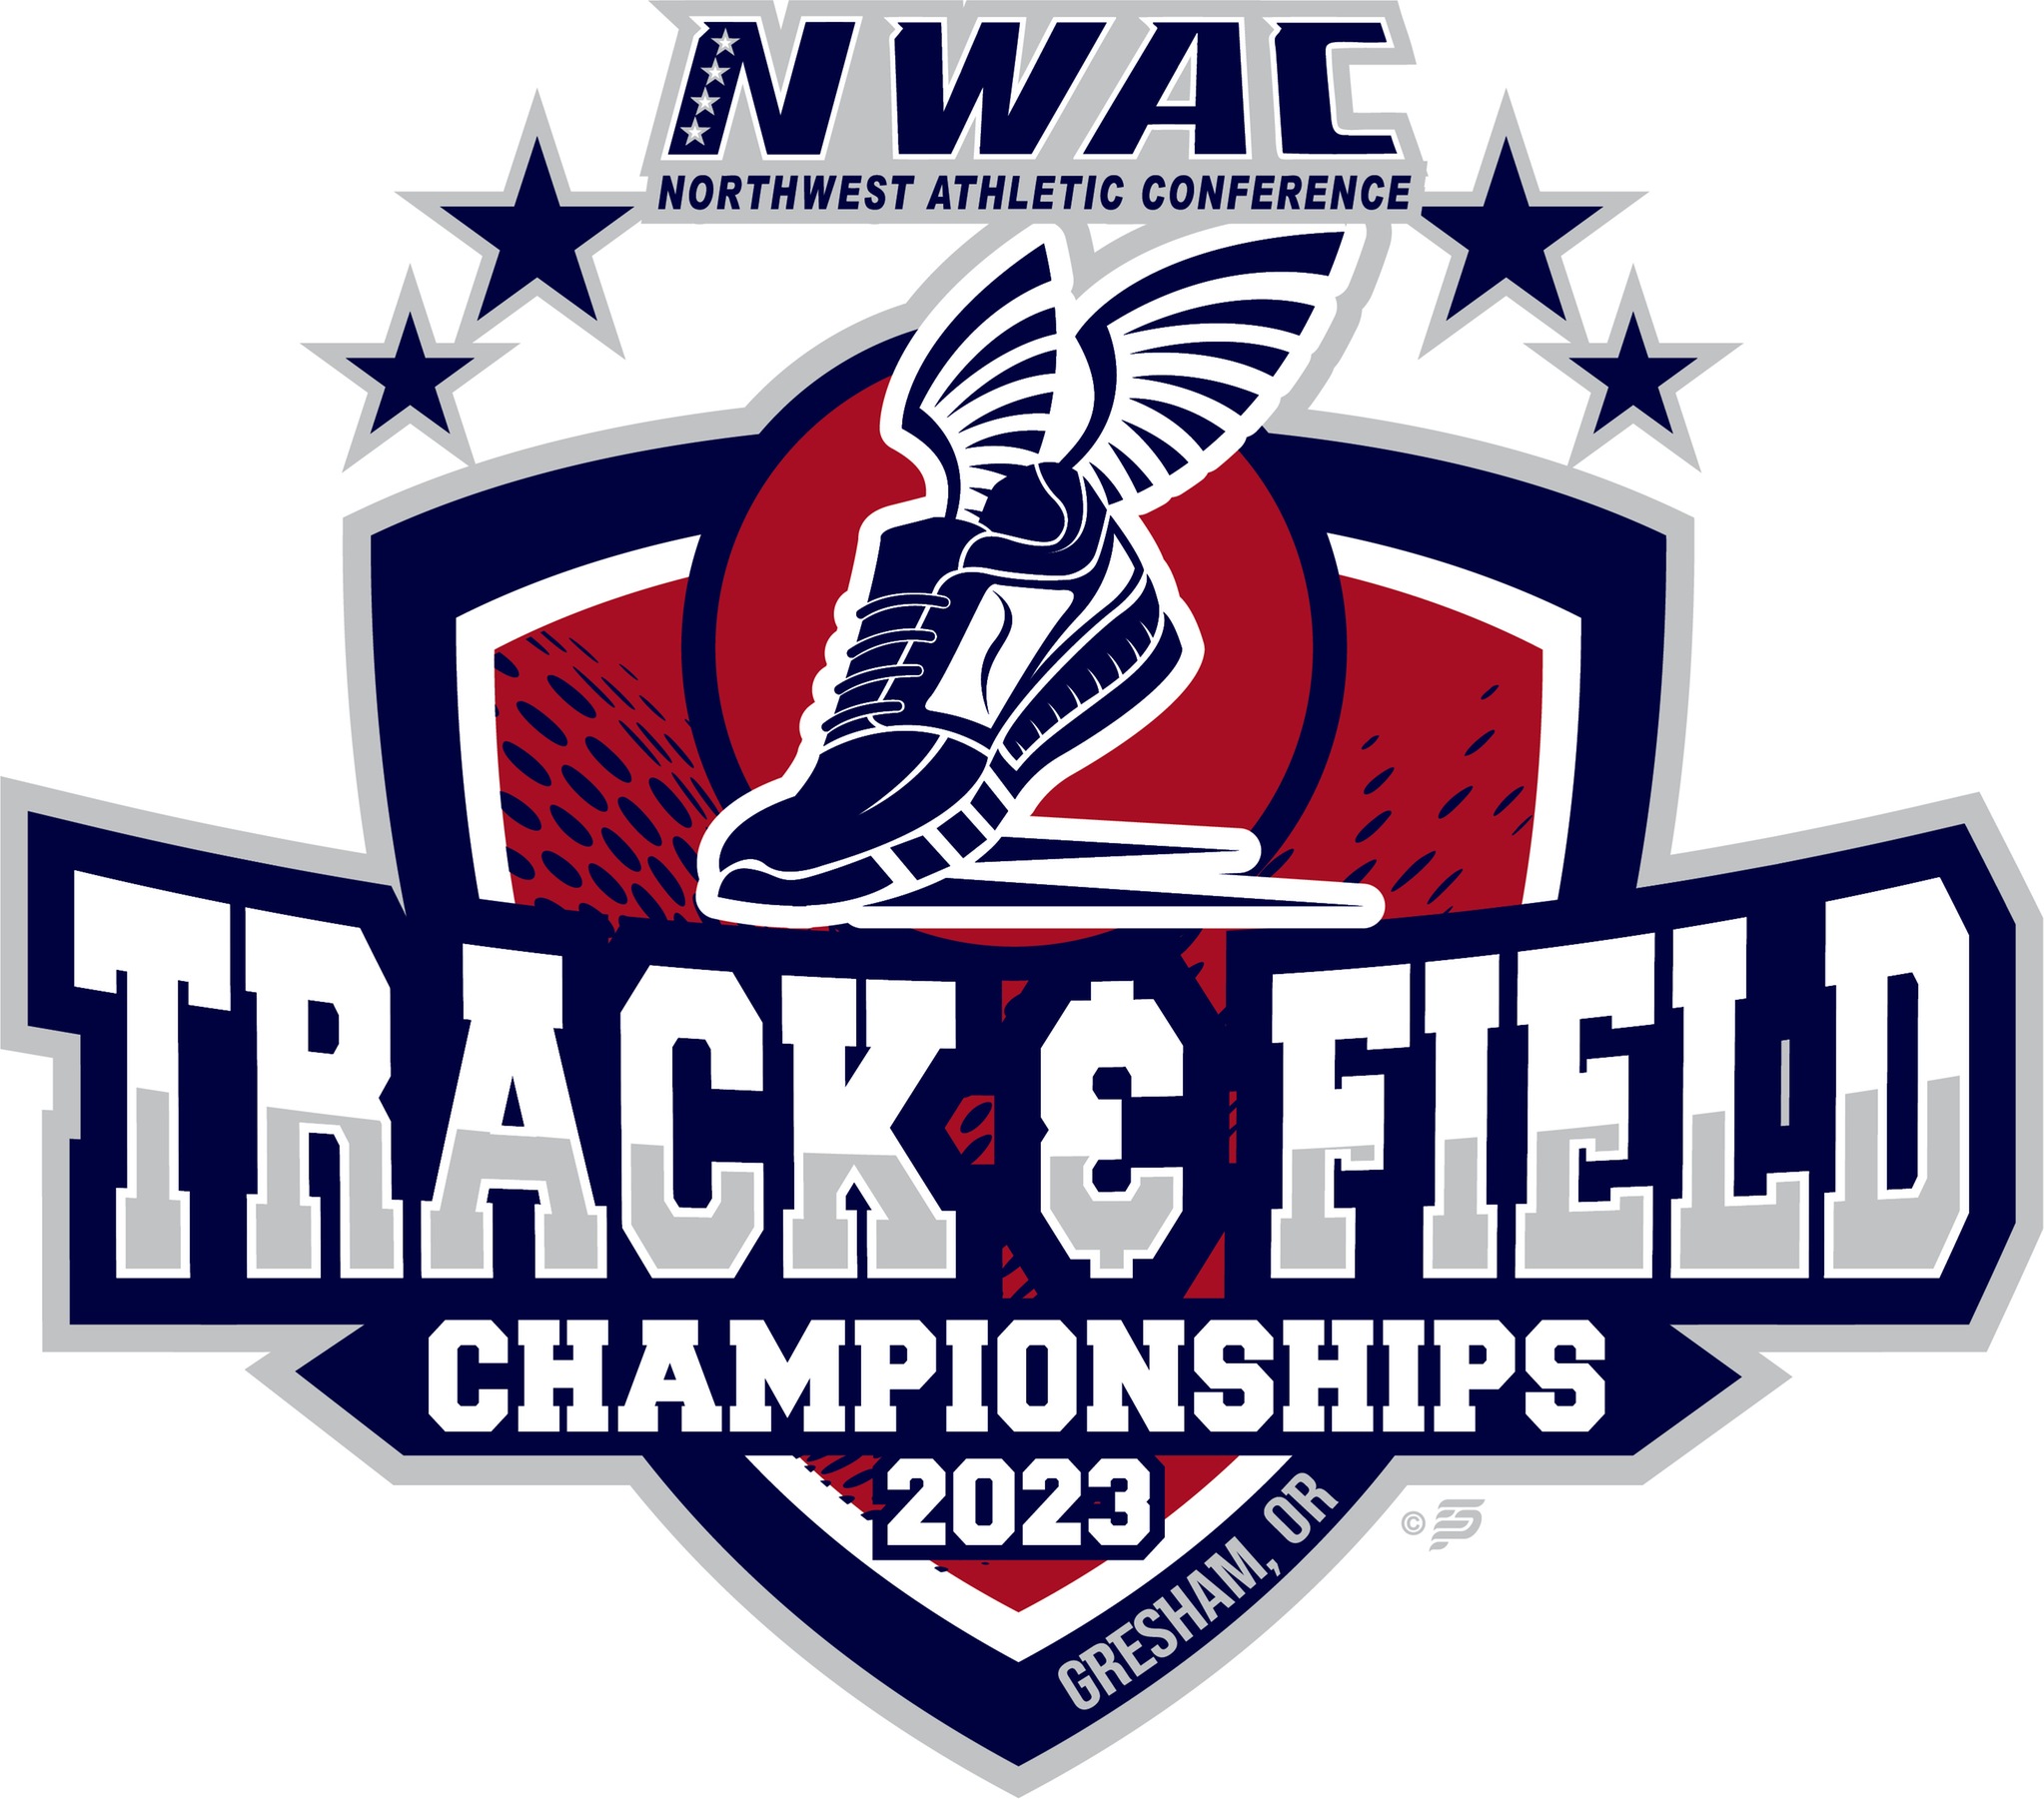 NWAC Track & Field Championships logo